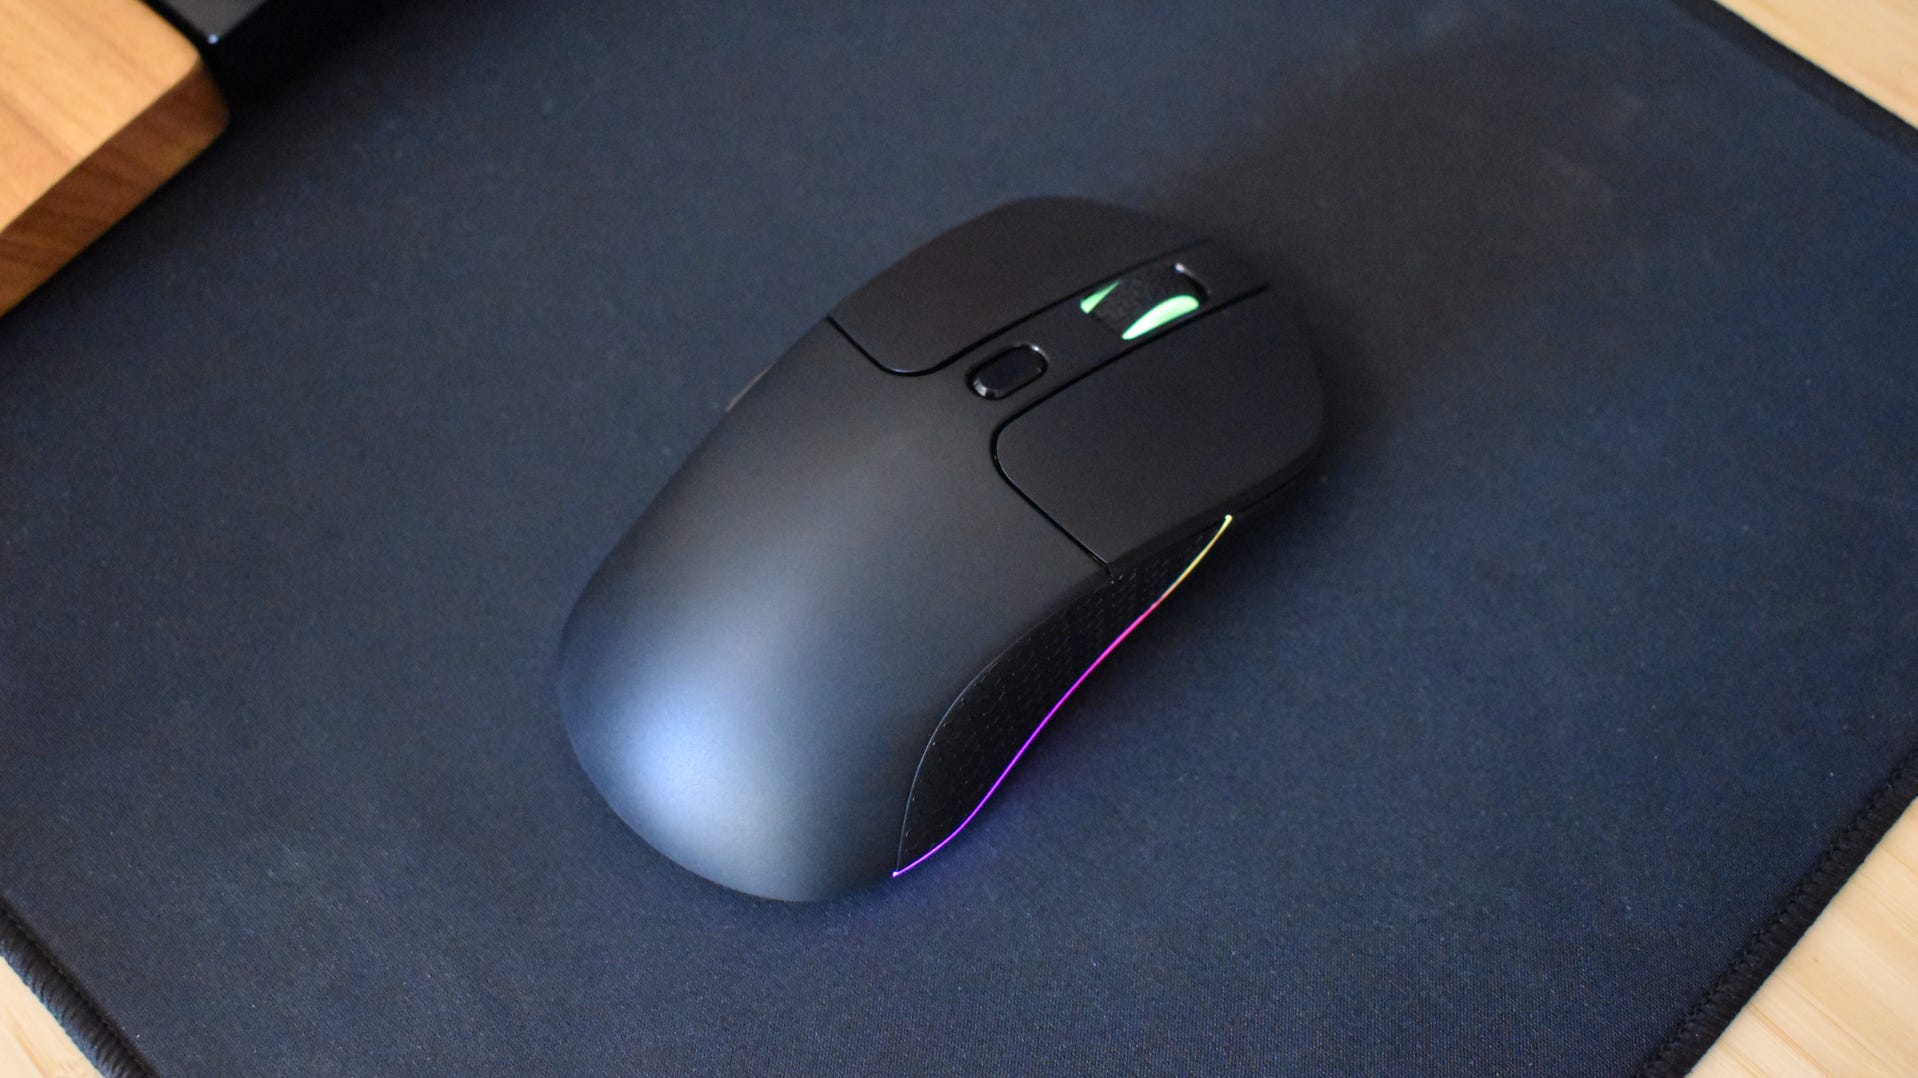 Keychron M3 Wireless Mouse on black mousepad